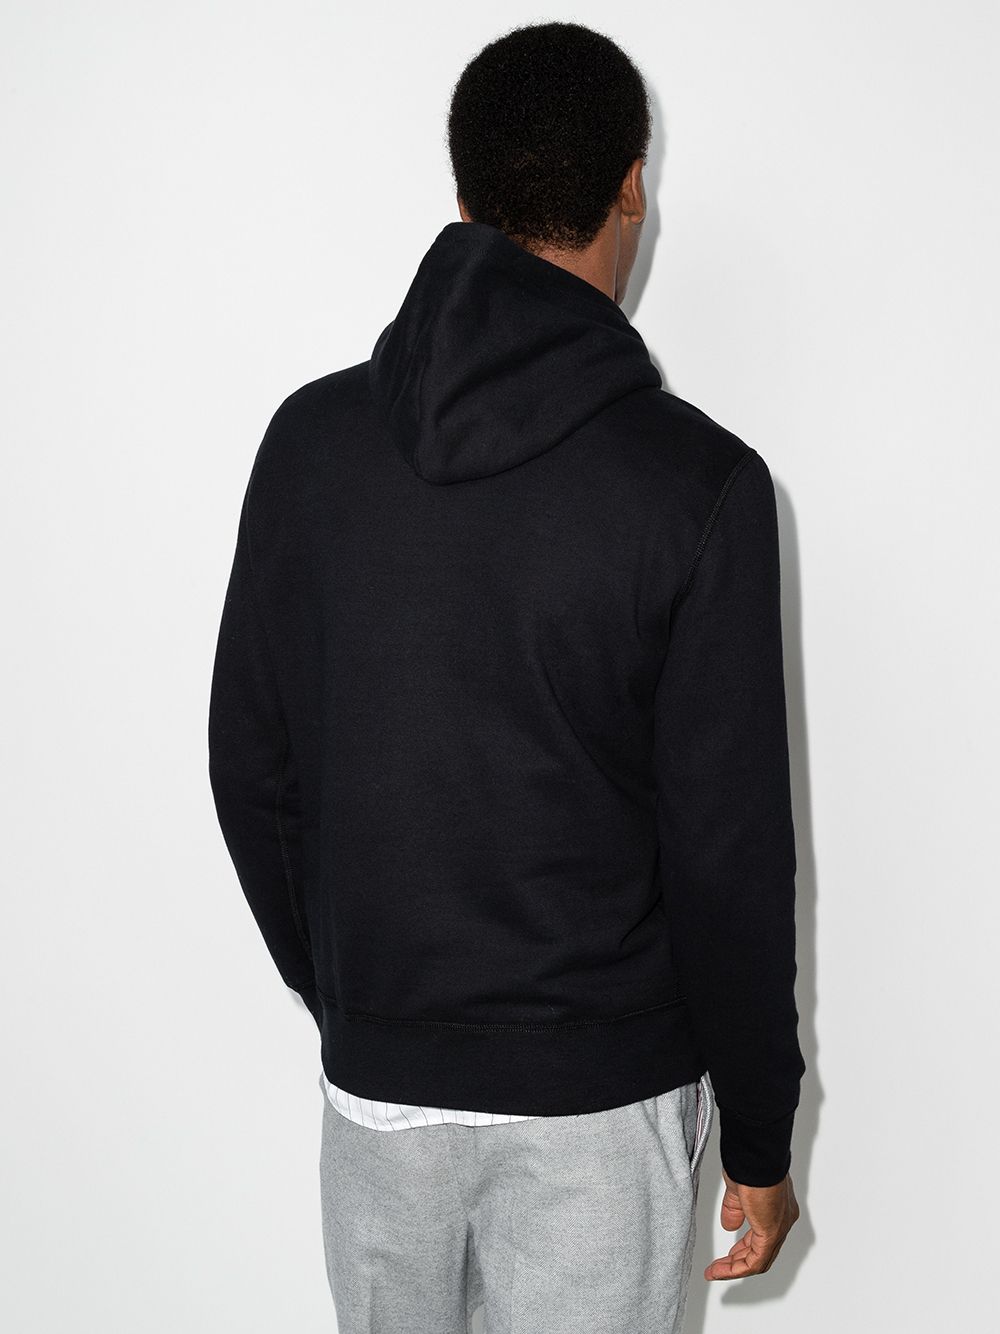 Embroidered logo hooded sweatshirt<BR/><BR/><BR/>